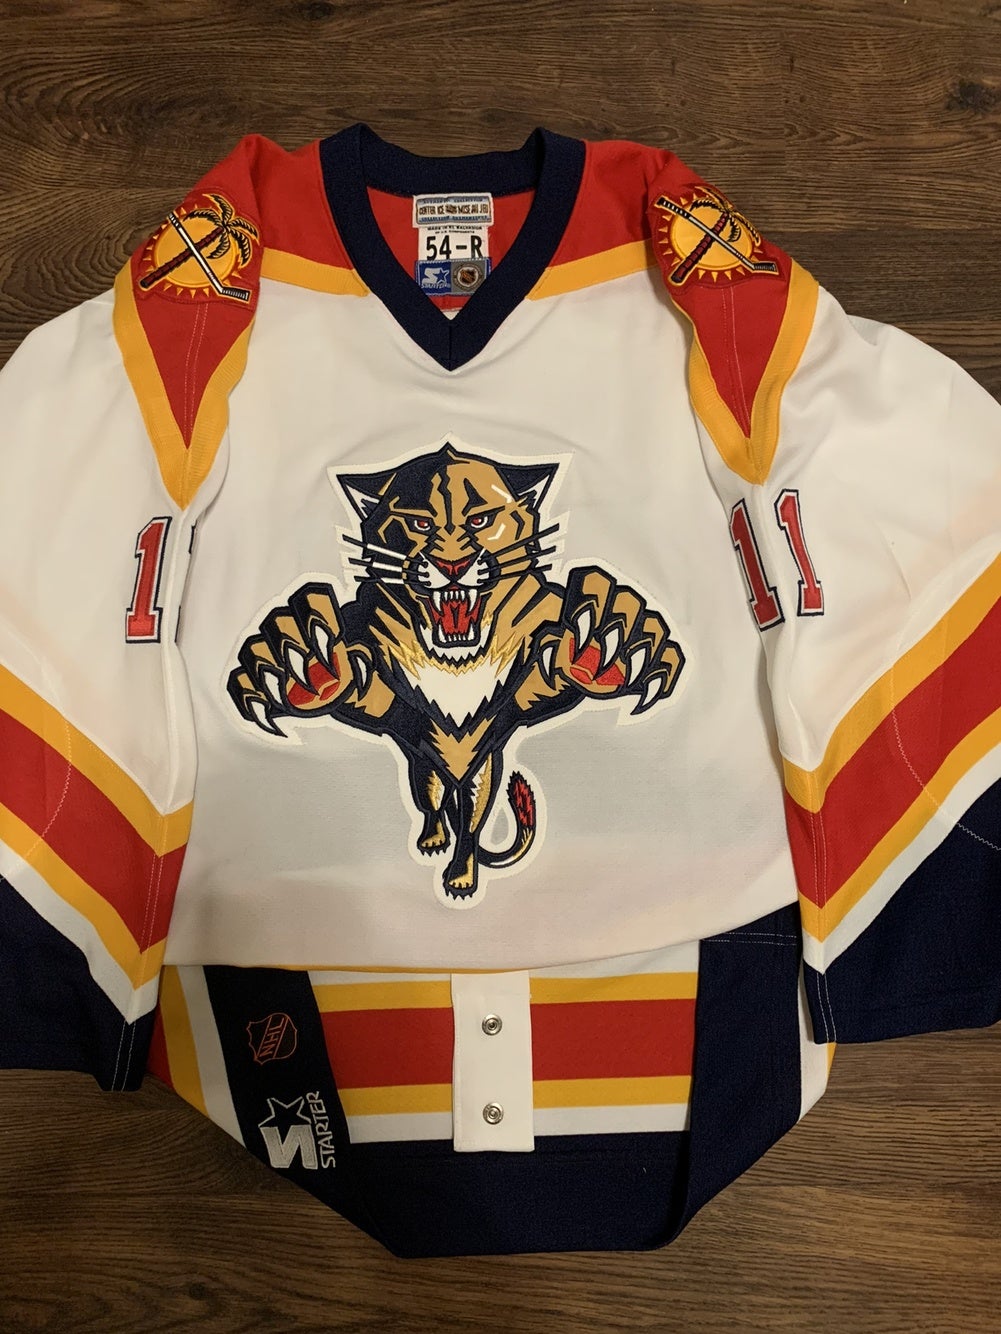 Year Of The Rat NHL Hockey Vintage Starter Florida Panthers Shirt